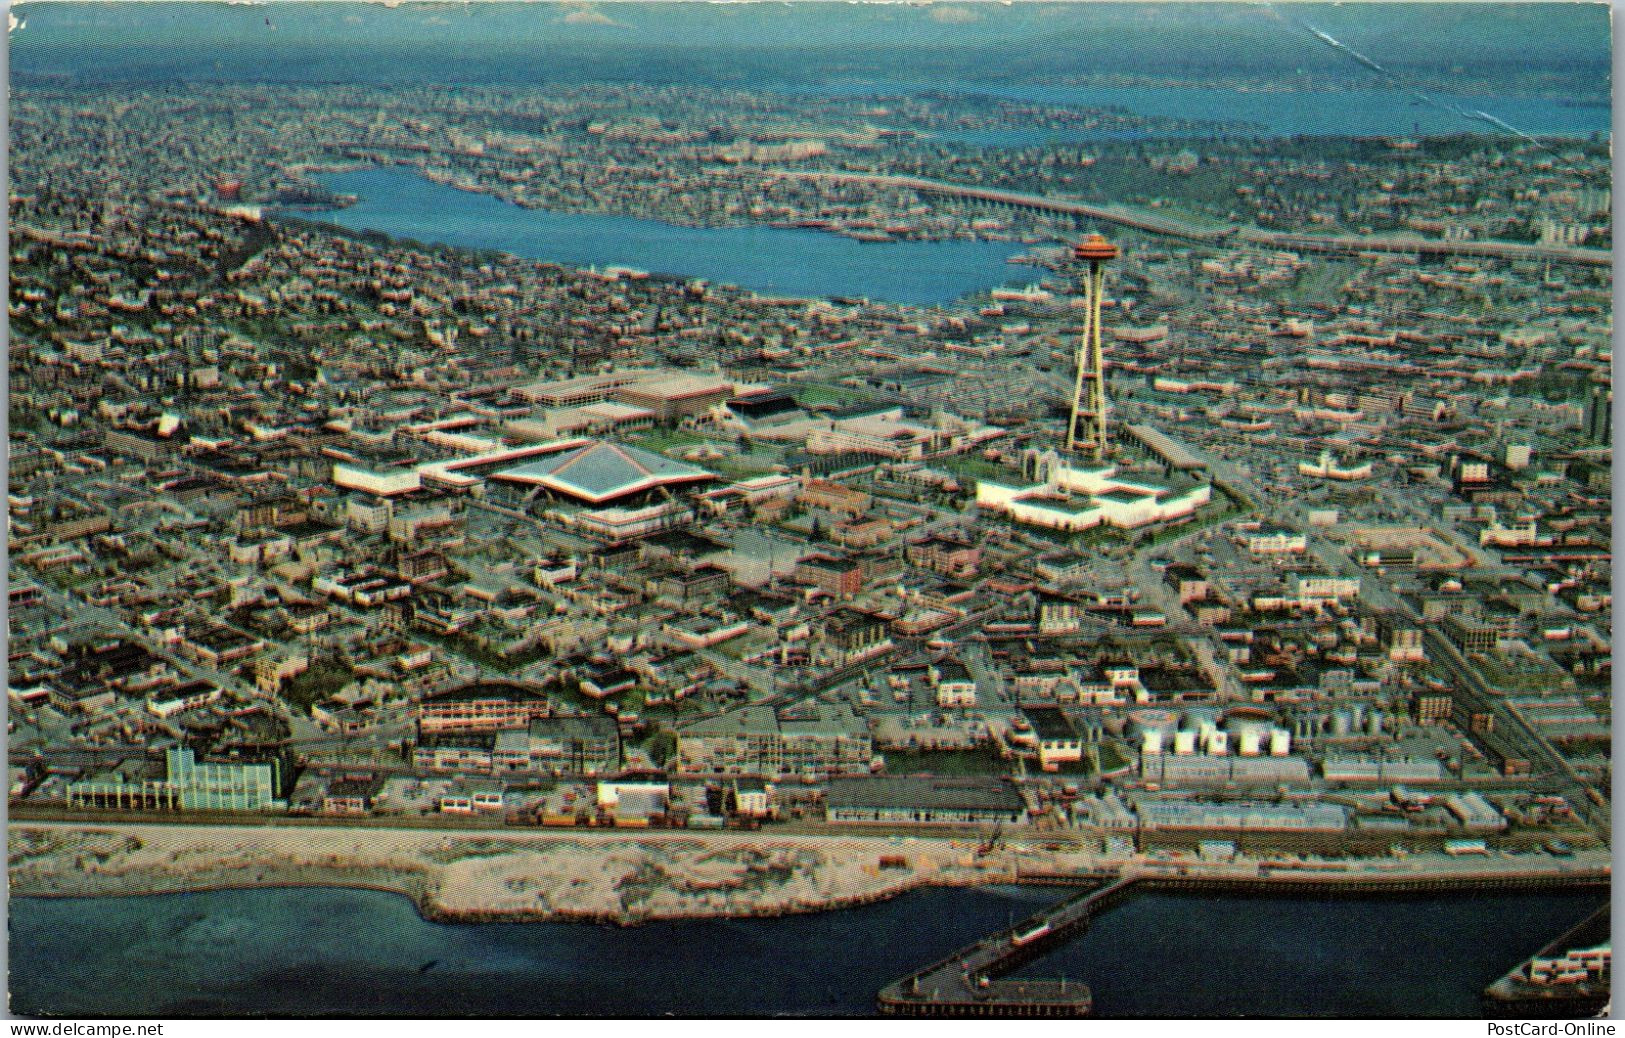 48499 - USA - Seattle , Seatle Center Space Needle And Coliseum , Washington - Gelaufen 1970 - Seattle